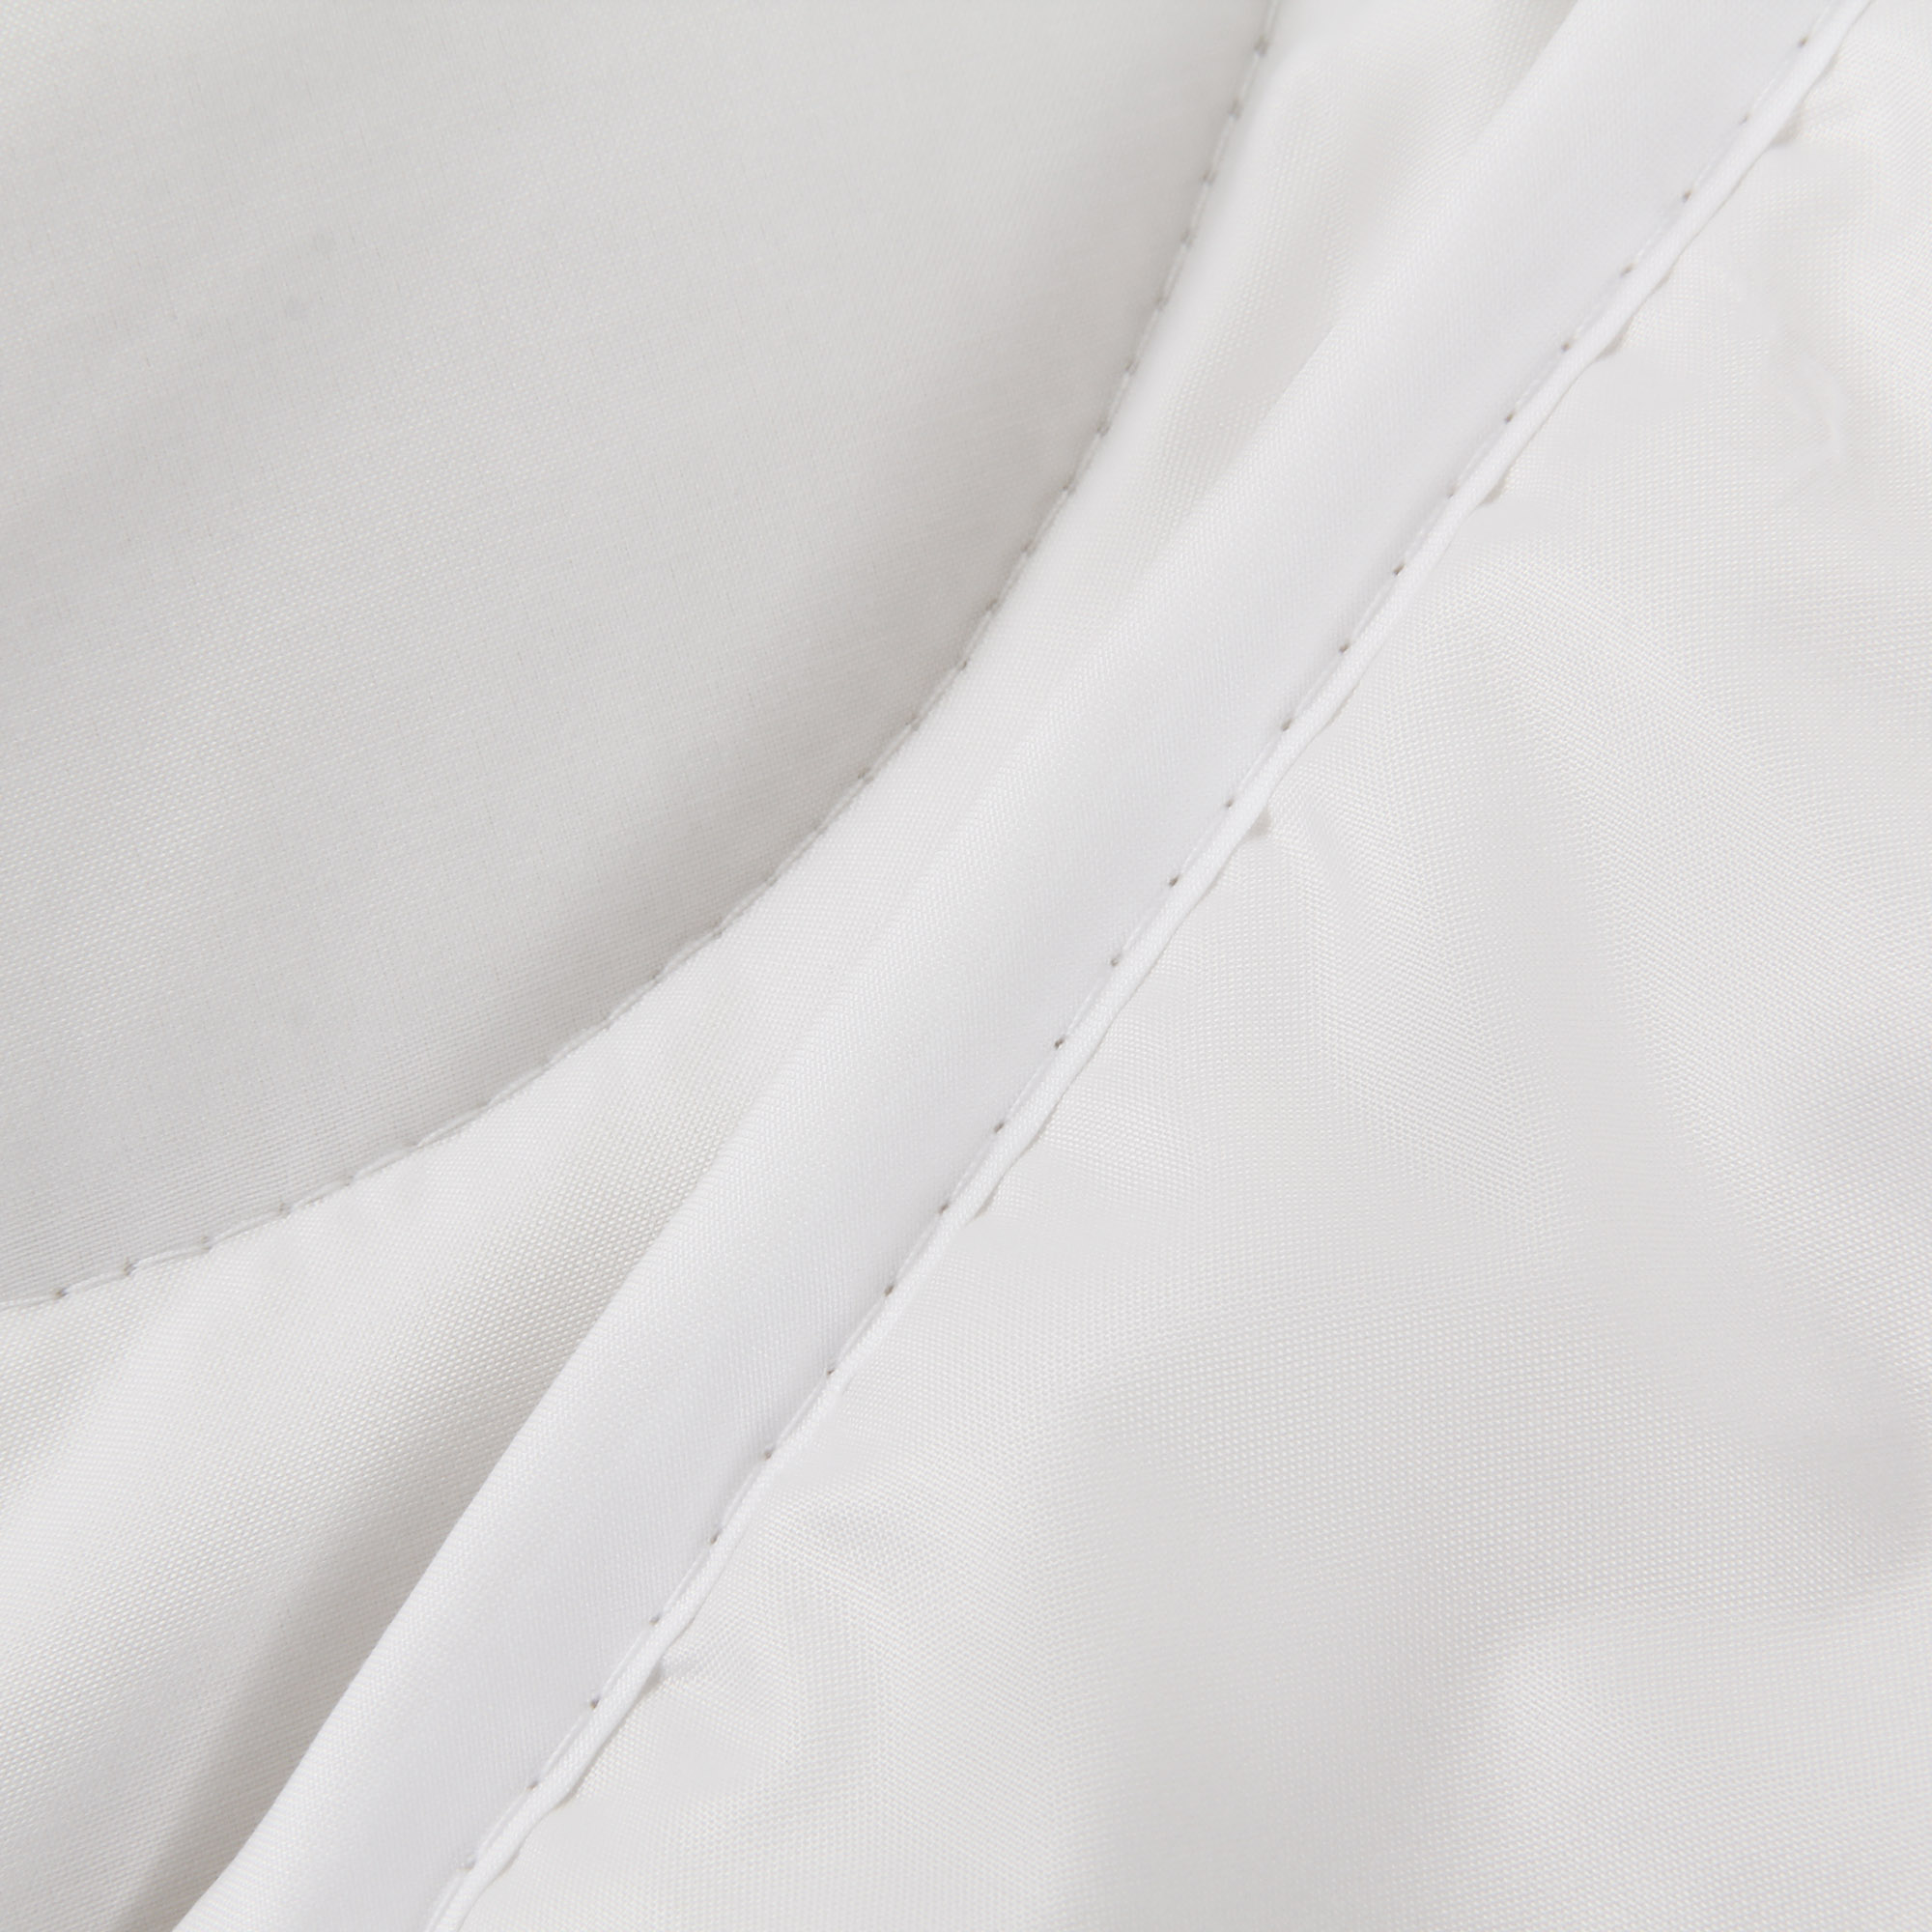 Одеяло среднее Estia Фальтерона 200х210, размер 200х210 см - фото 8